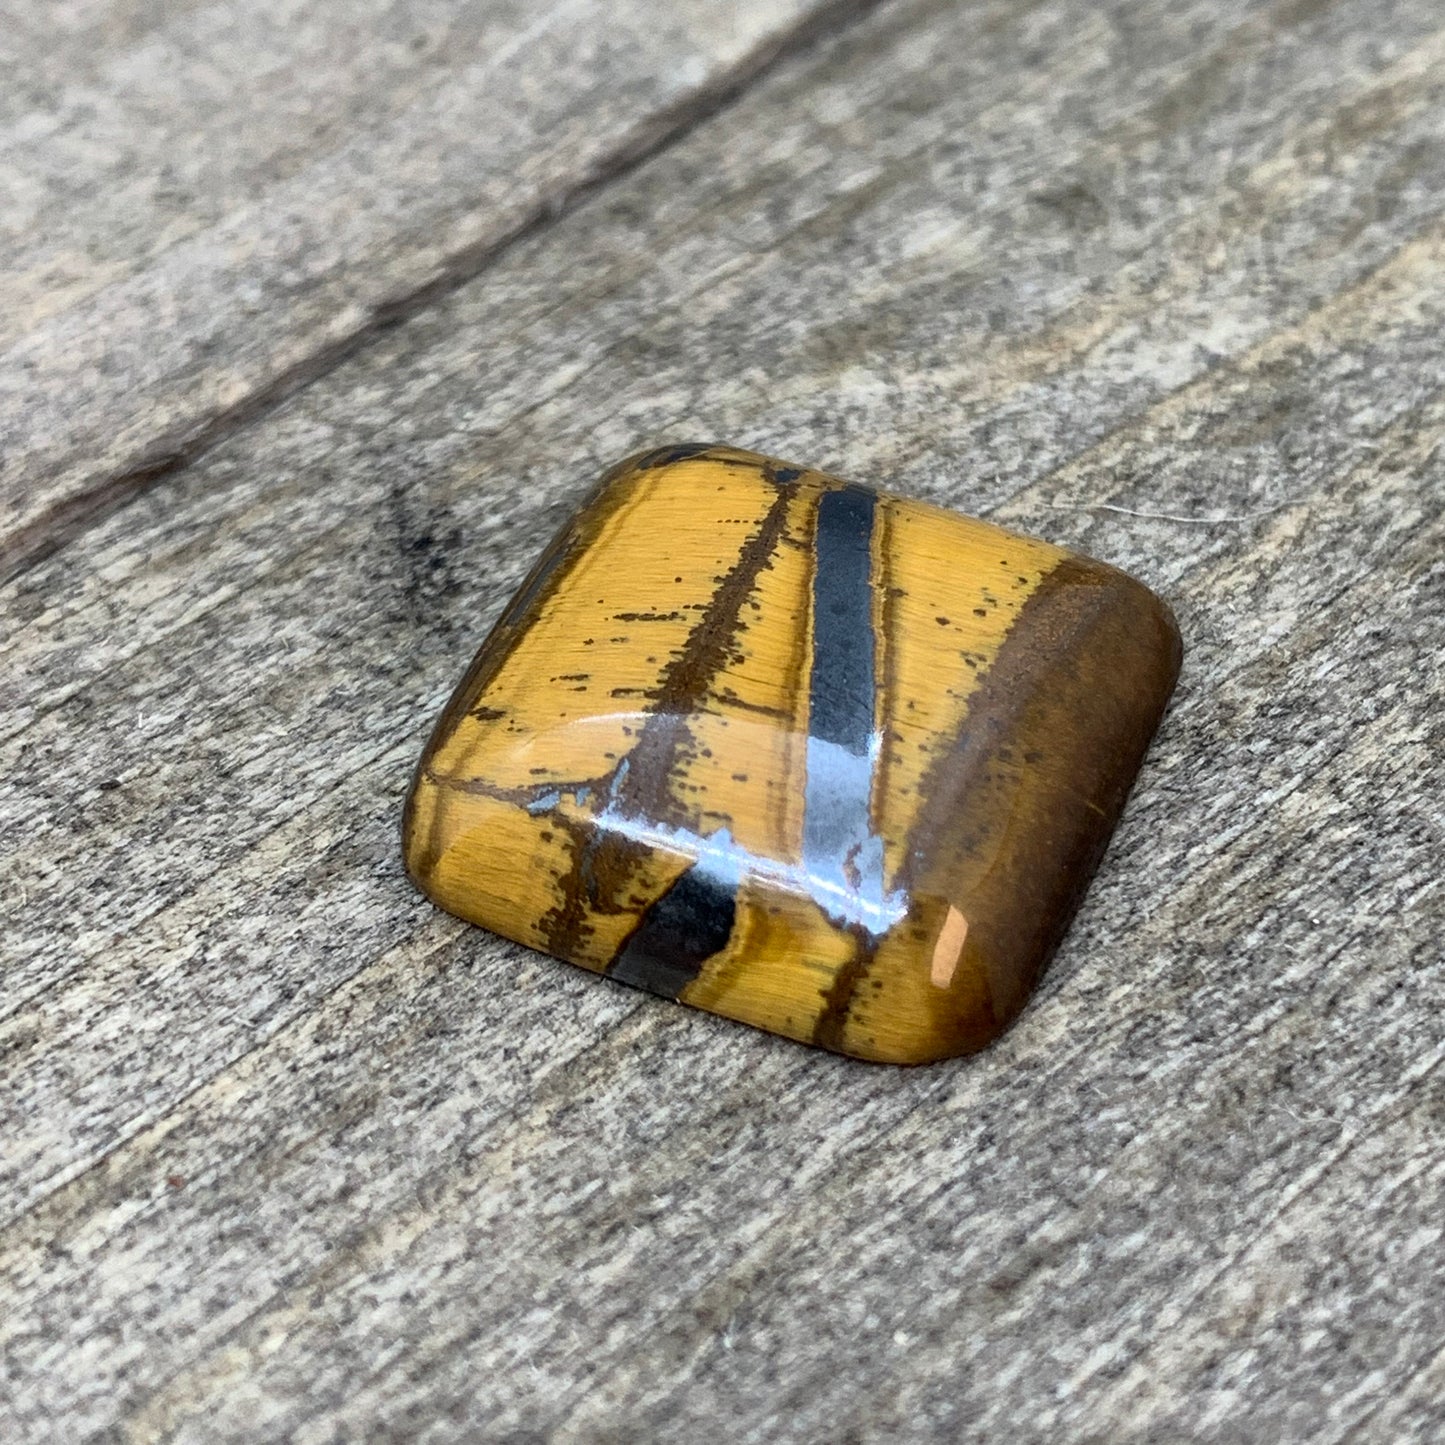 Tiger's Eye Cabochon - 12.8 carats (17 mm x 17 mm)